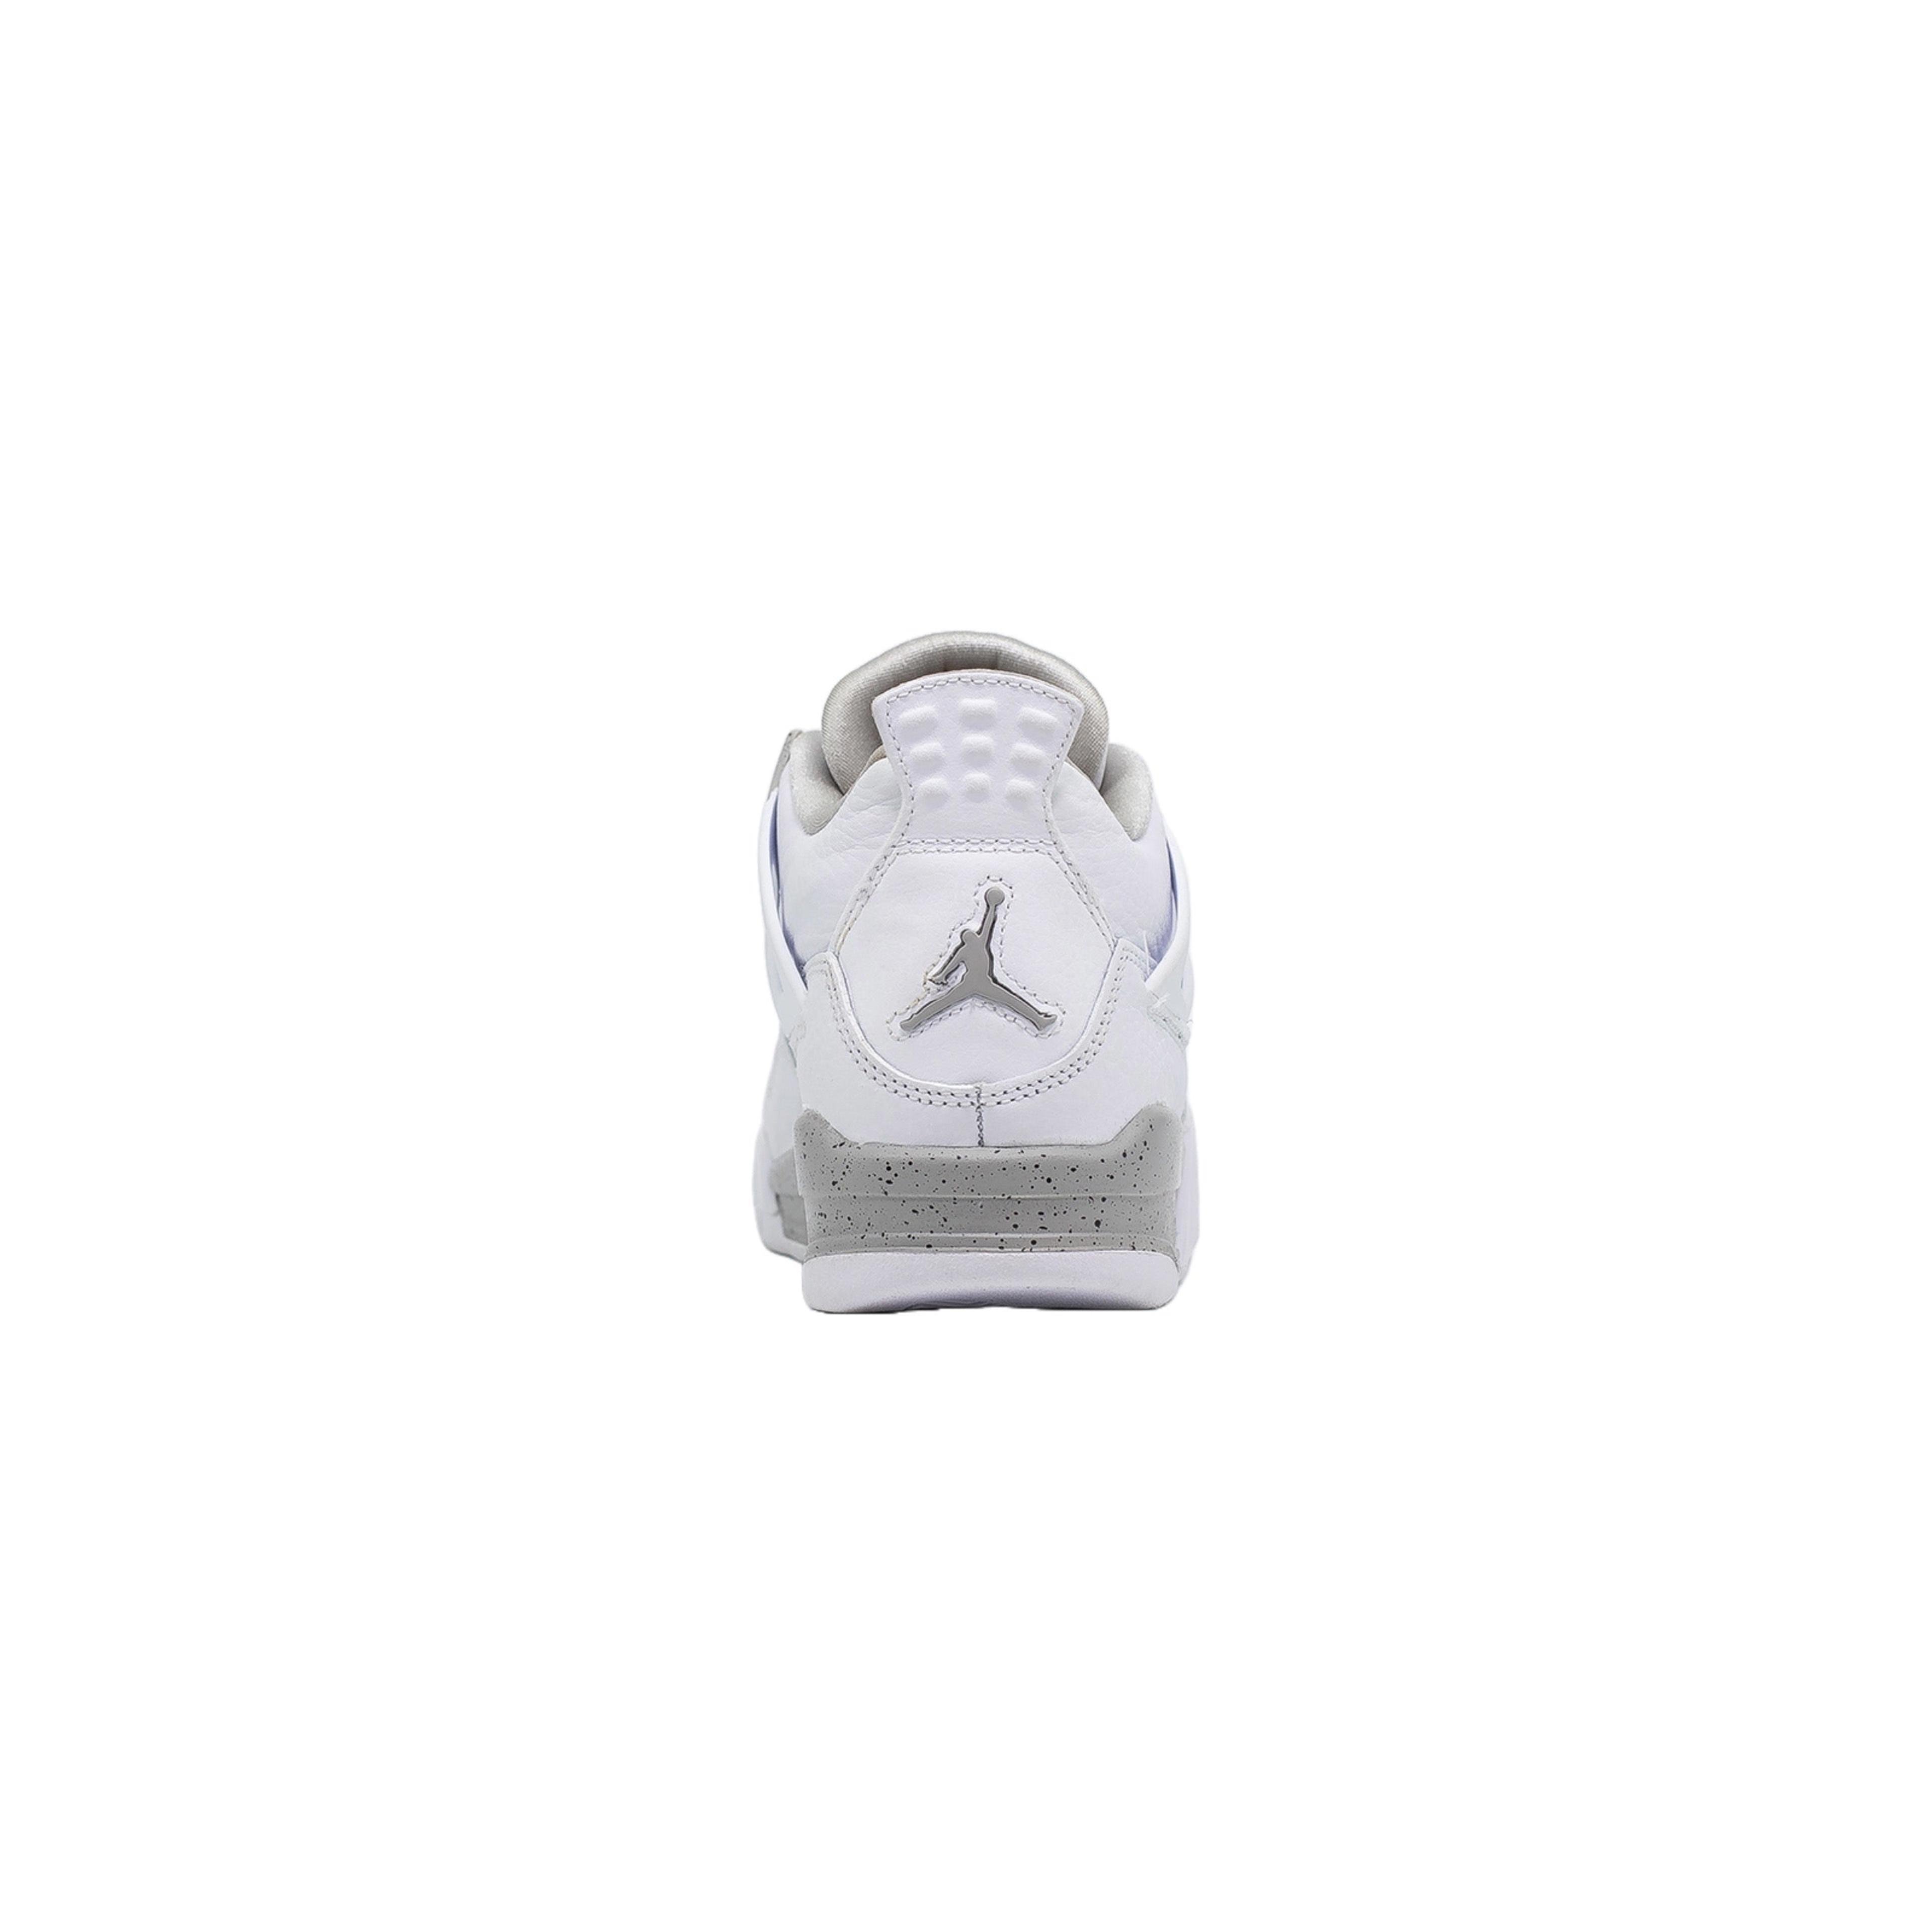 Alternate View 2 of Air Jordan 4, White Oreo